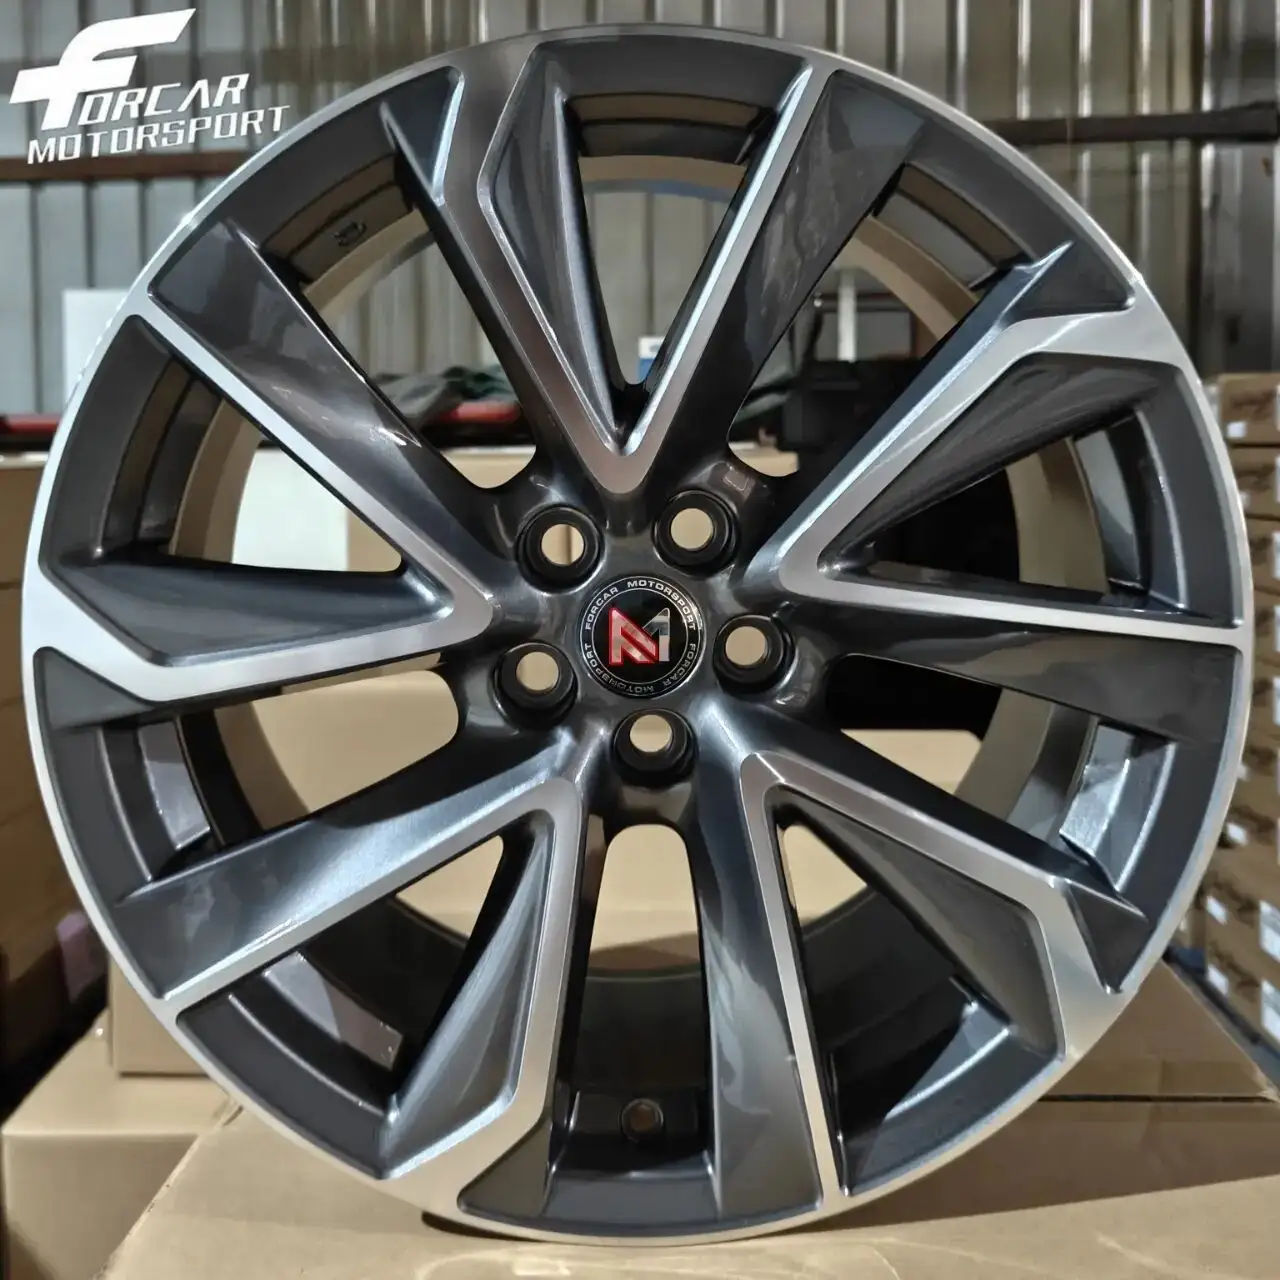 Replica High Quality 16-20 Inch Wheel Black Aluminum Alloy Wheel Rim on Sale